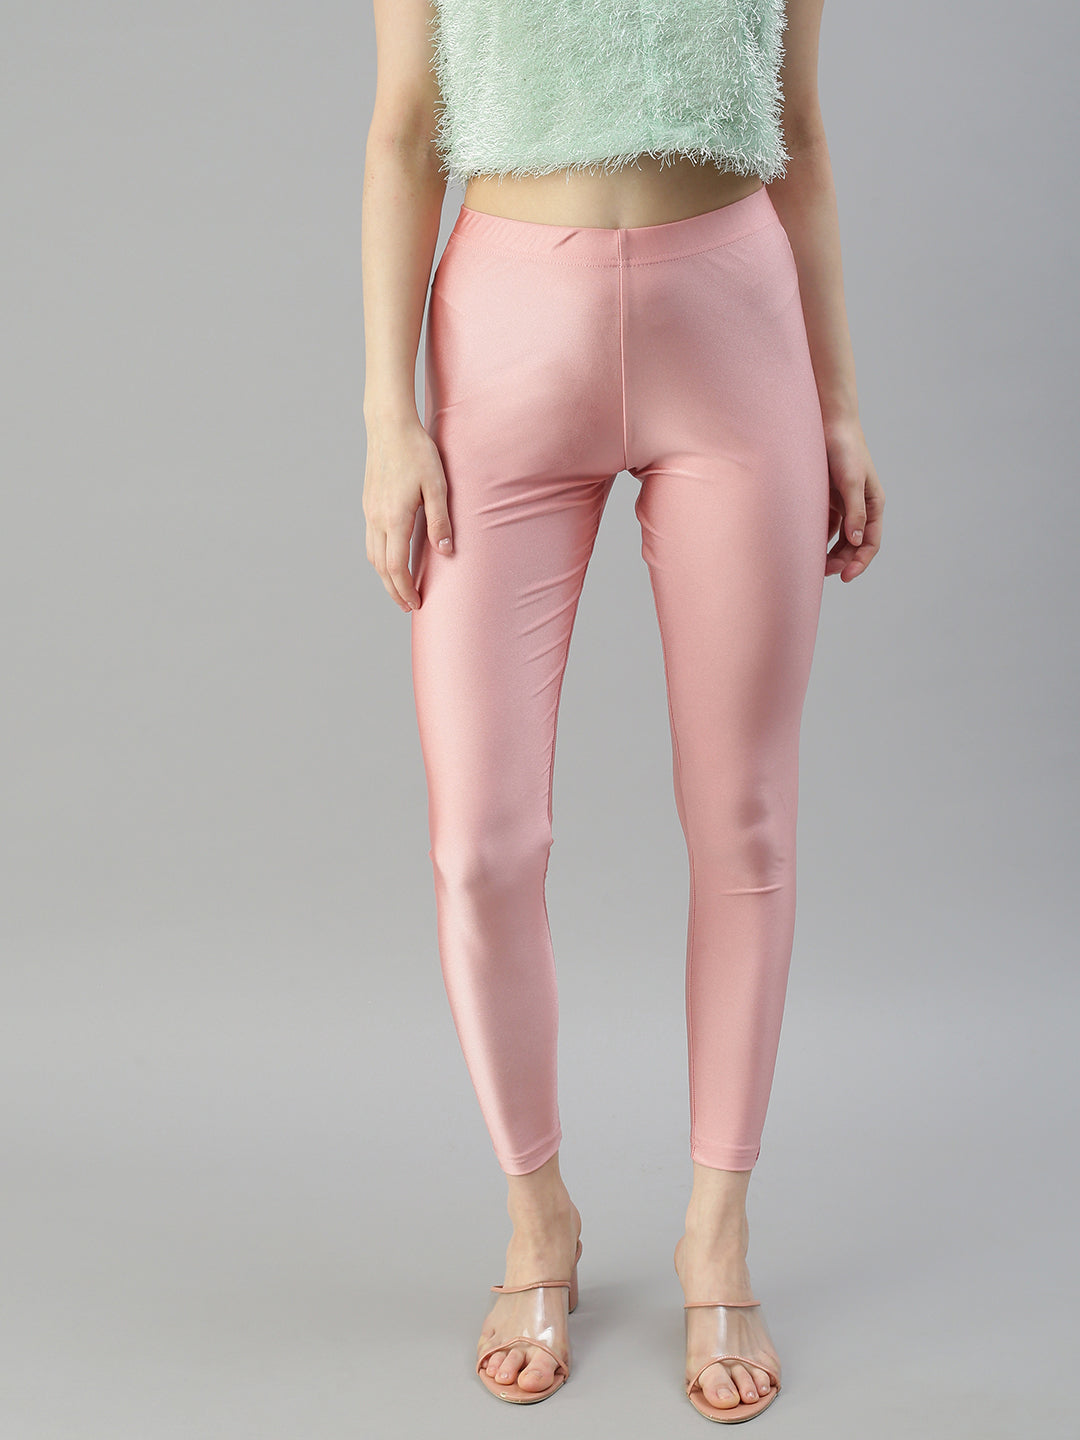 Pink Cotton : Shop Dark Rose Cotton Spandex Ankle Length Legging